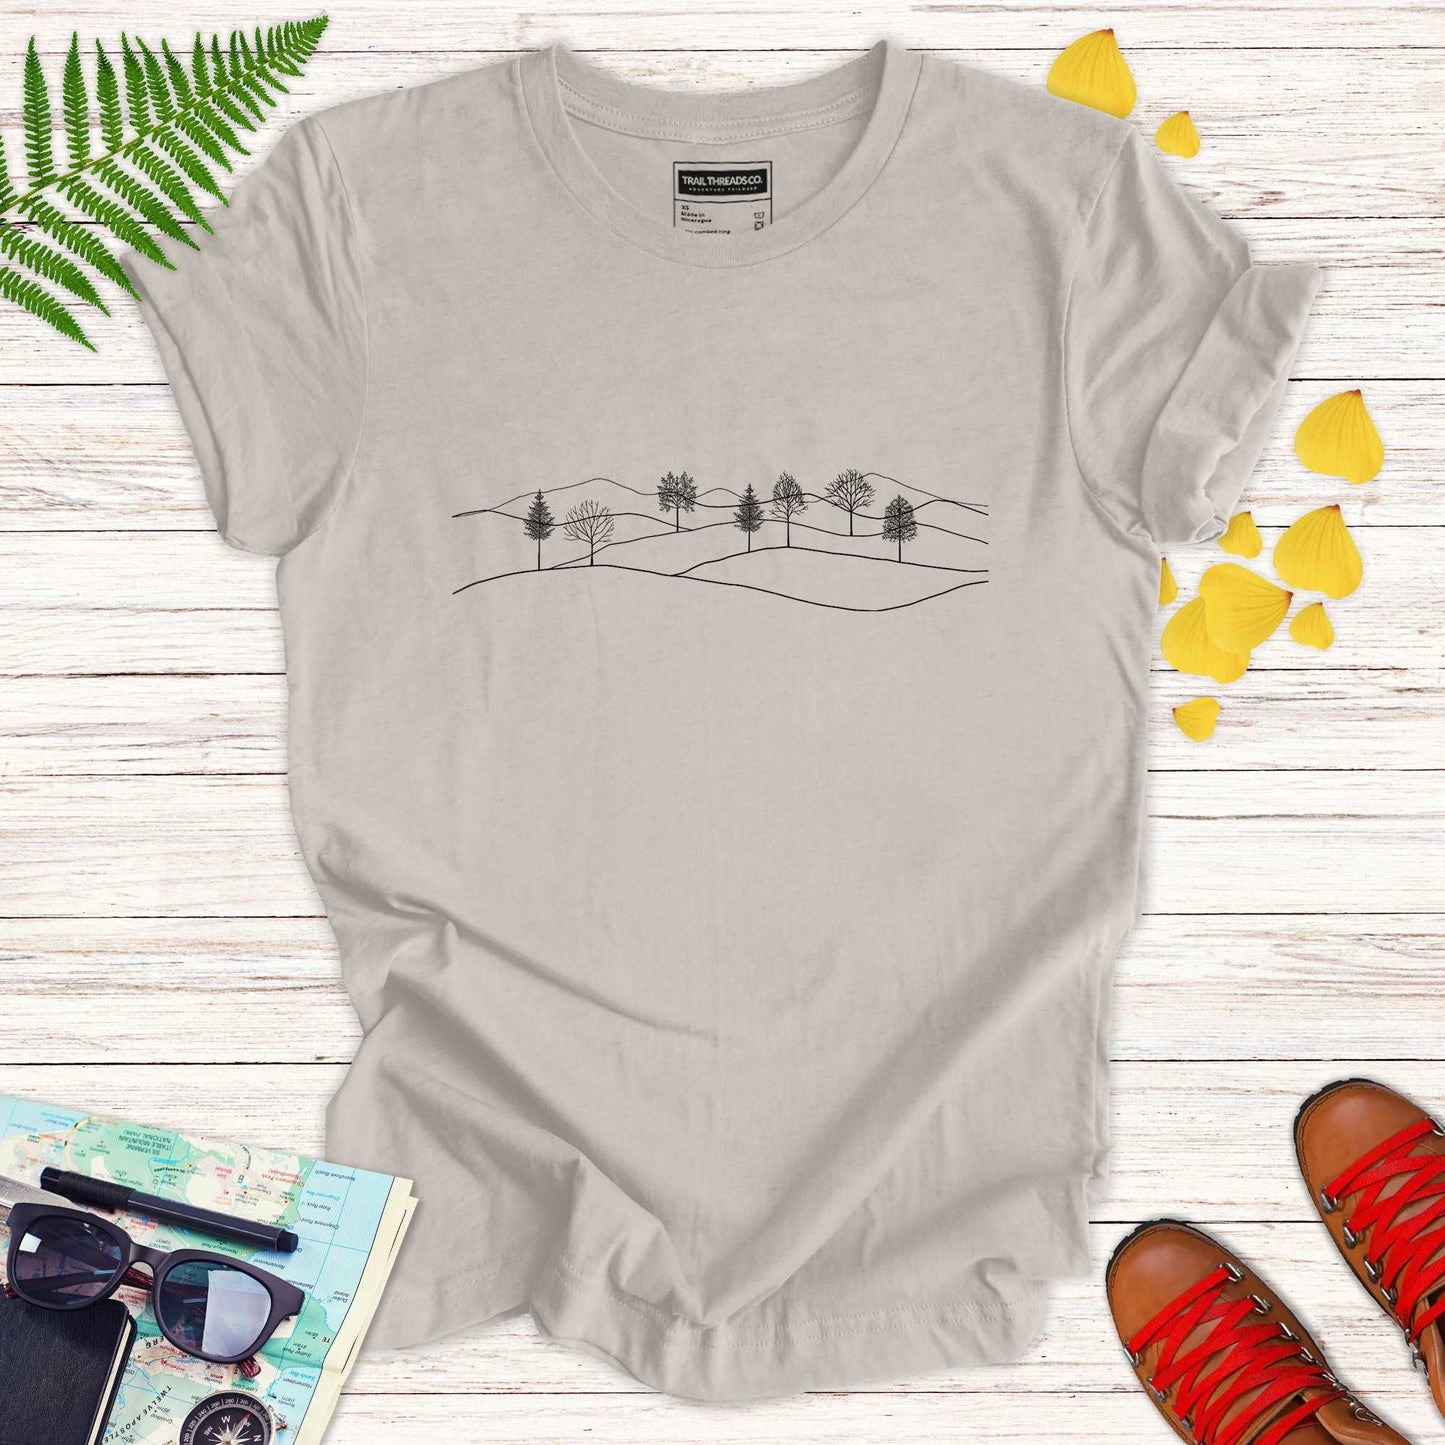 Minimalist Meadow T-shirt - Trail Threads Co. Limited